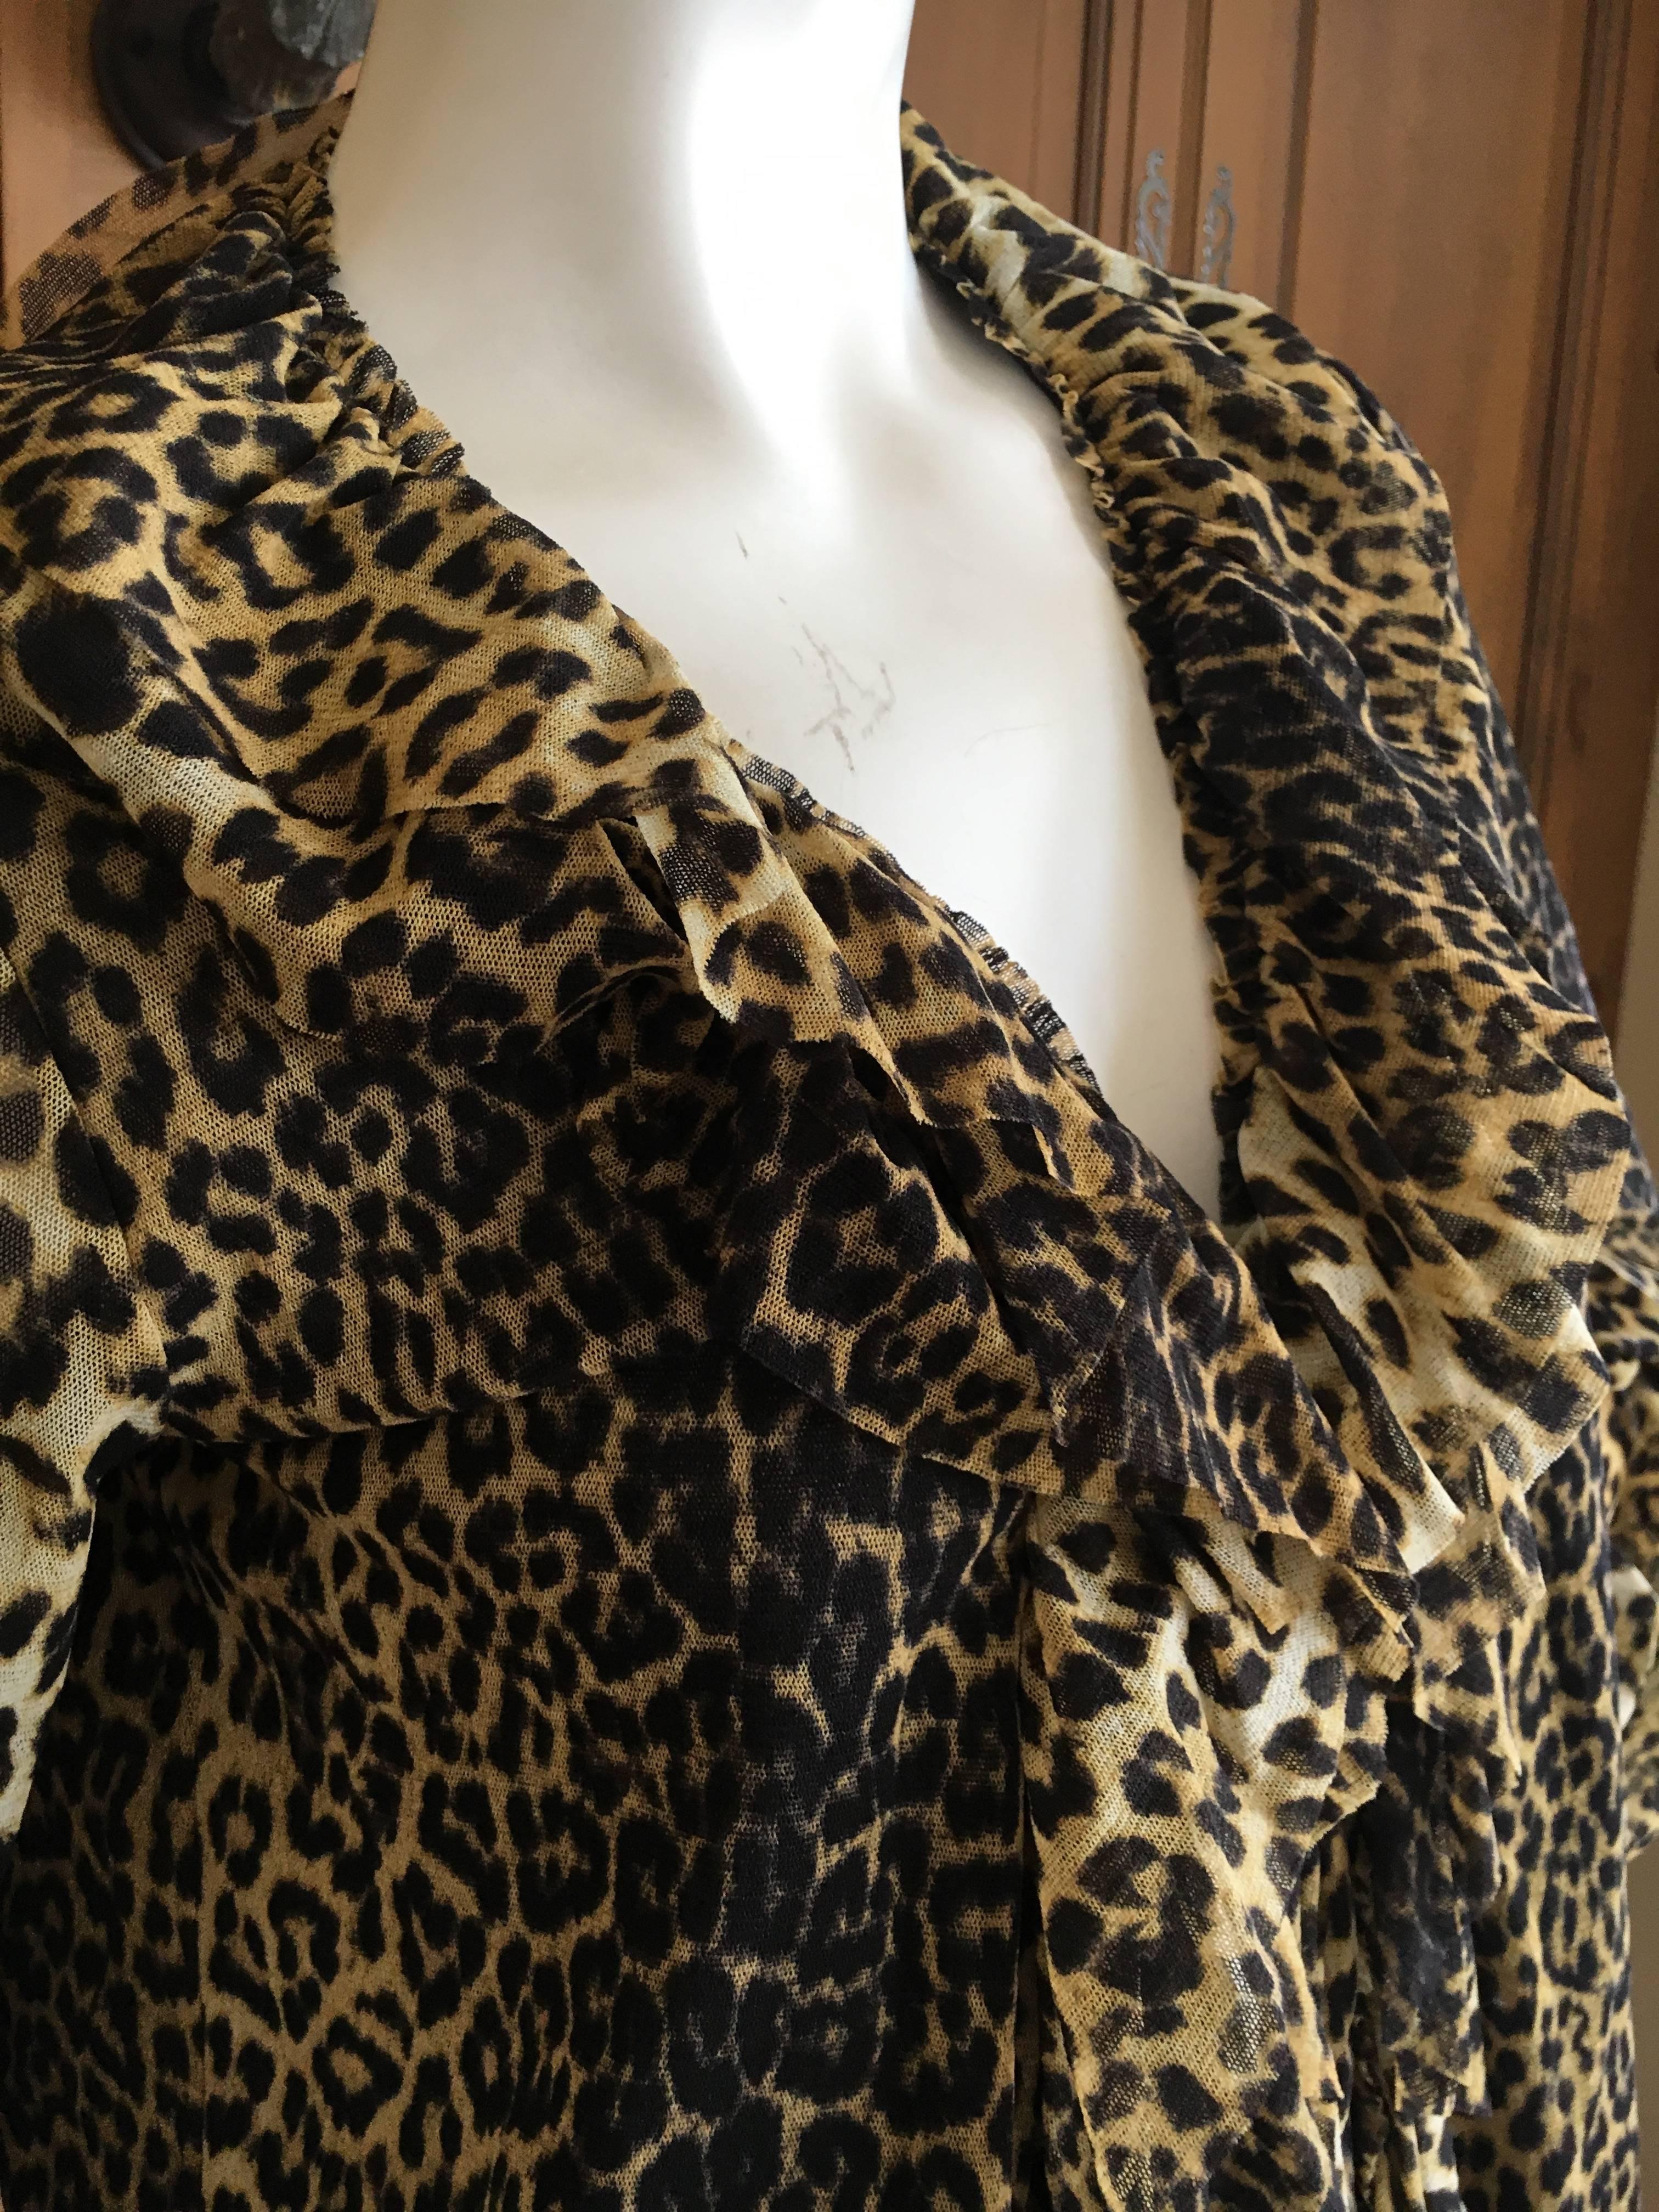 Jean Paul Gaultier Soleil Vintage Ruffle Front Leopard Print Cardigan.
Size M
Bust 38